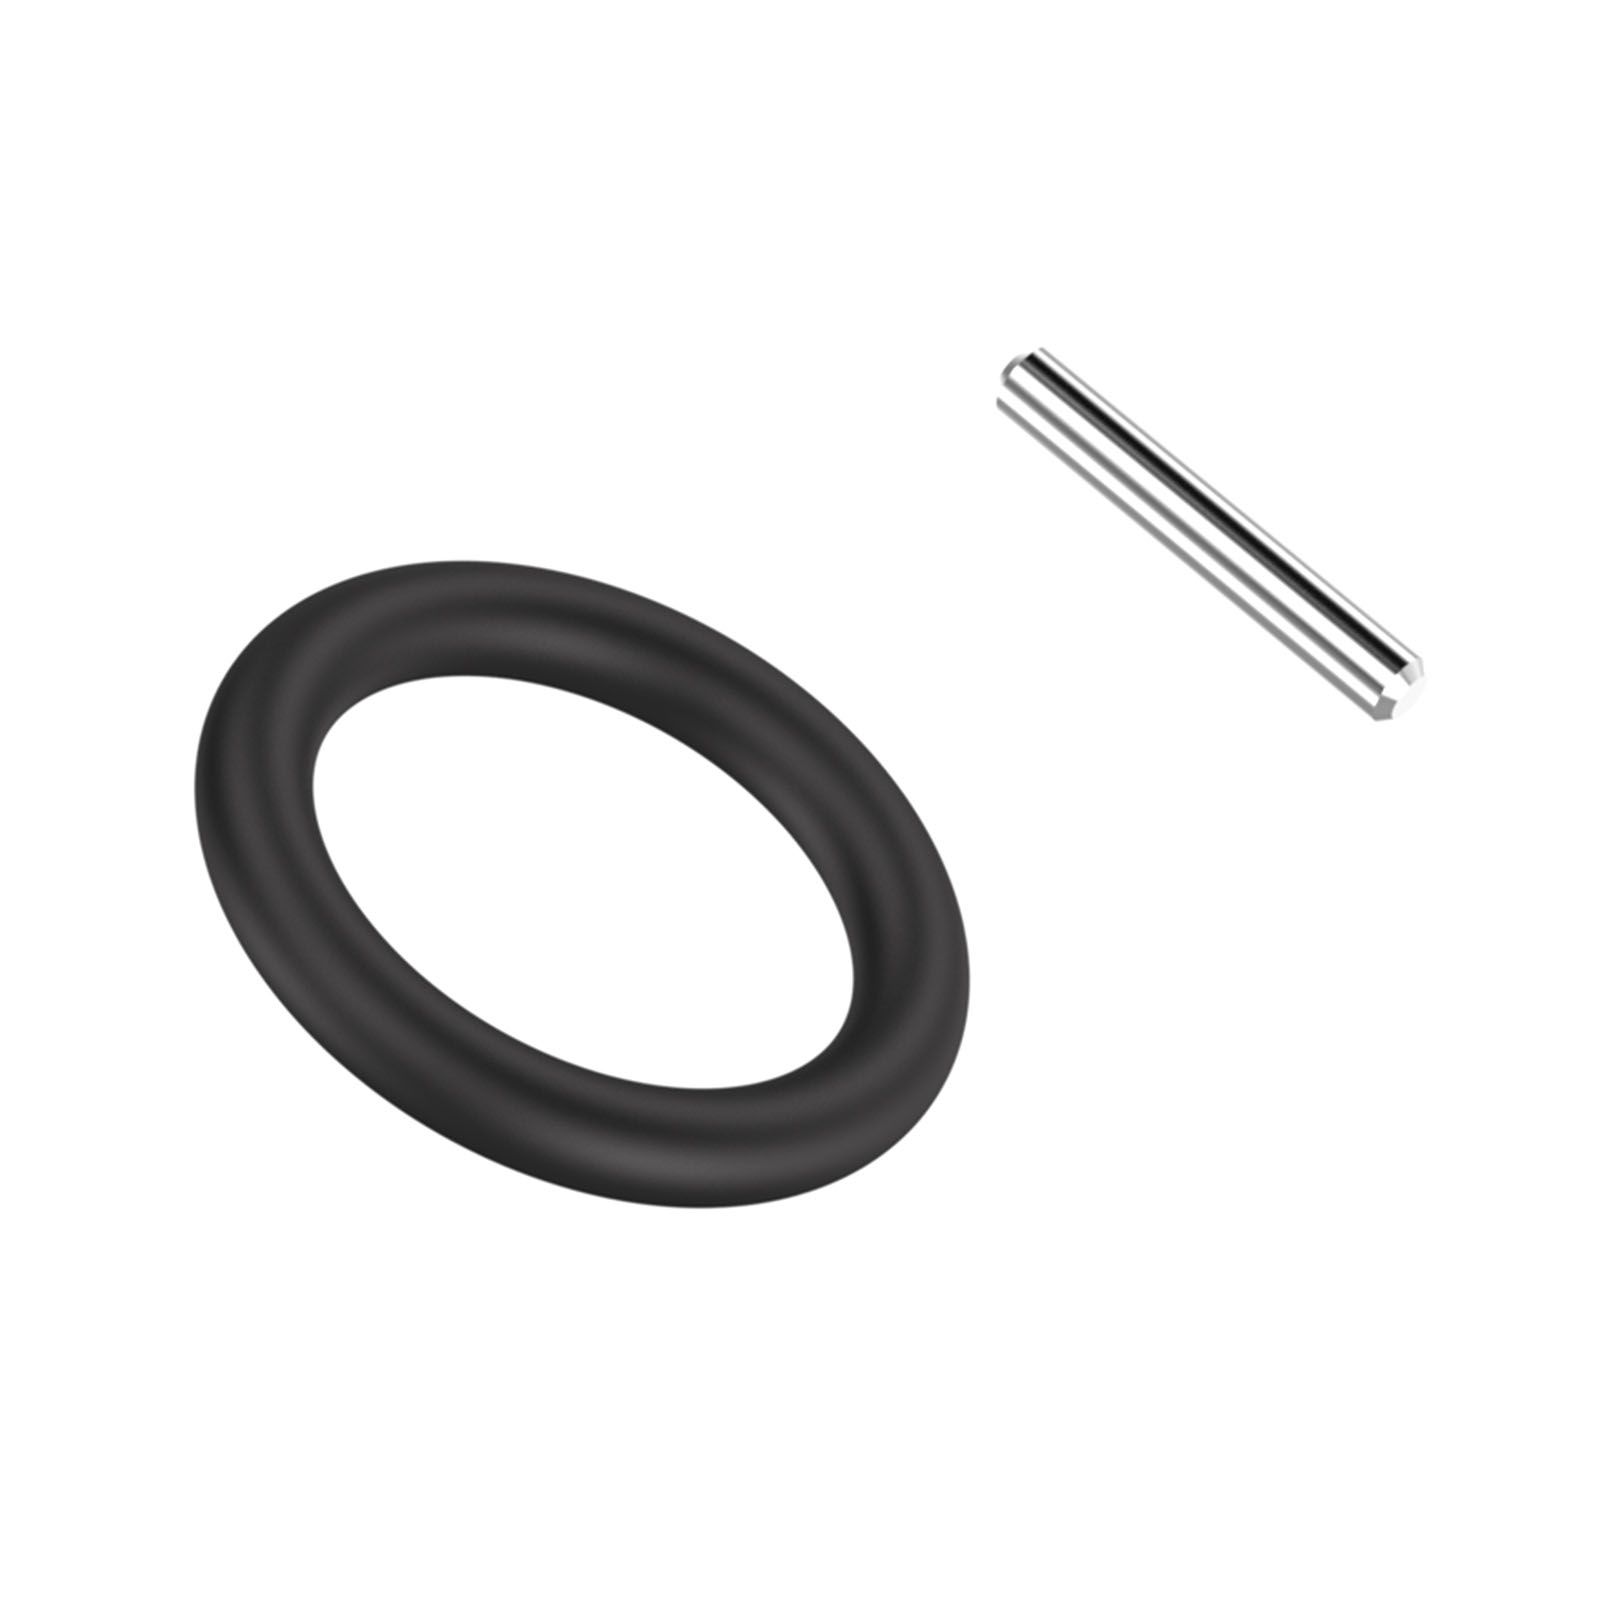 Pin and O-ring set-SQ2.1/2-d160 产品照片